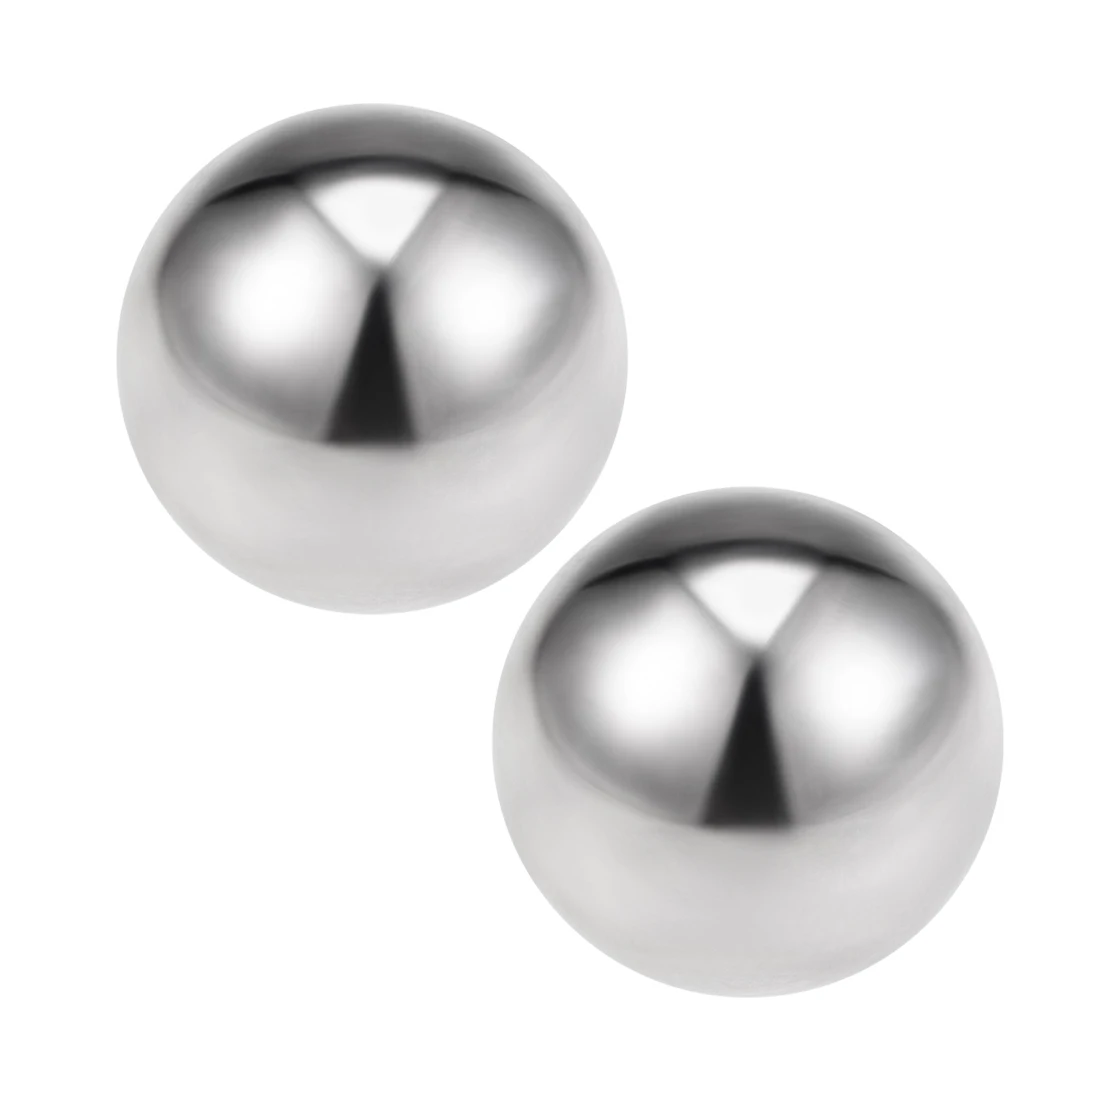 Ten 1//2 Inch Stainless Steel Bearing Balls G25